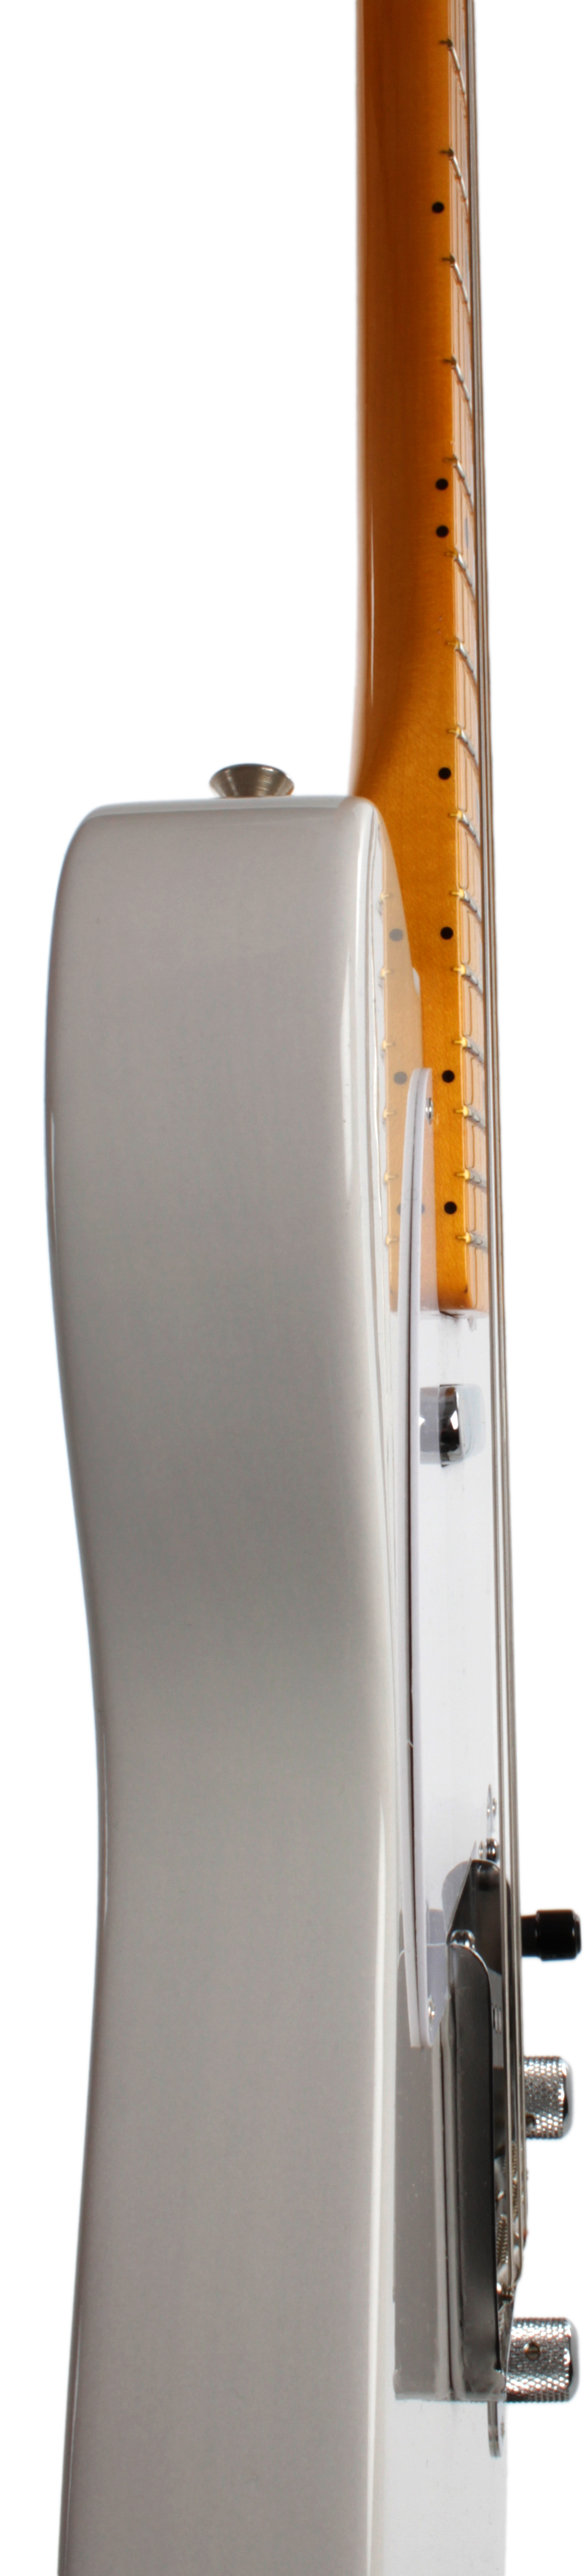 50's Telecaster White Blonde Lacquer